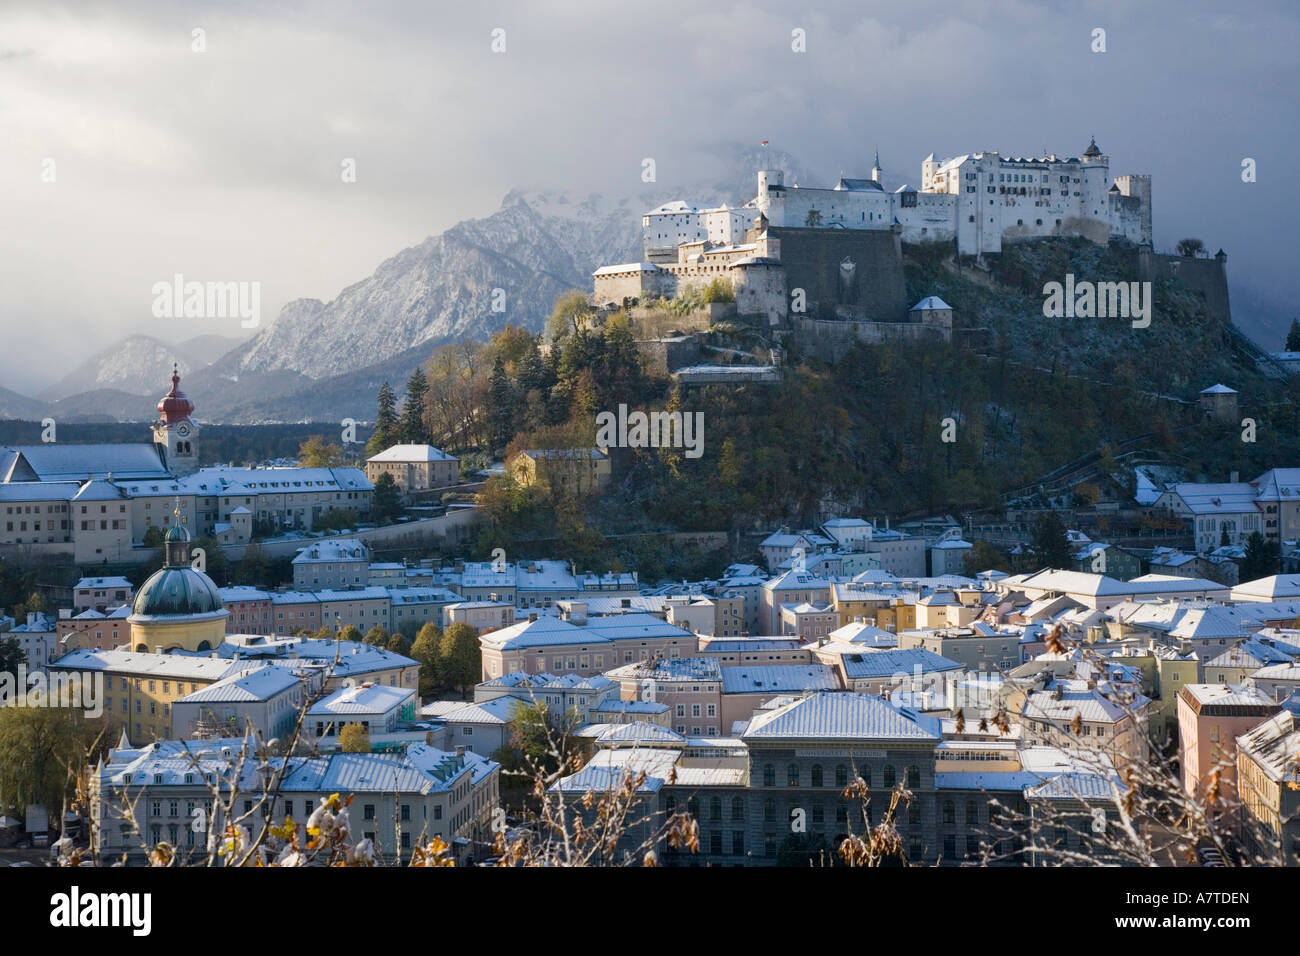 Castle on hill, Hohensalzburg Fortress, Salzburg, Austria Stock Photo